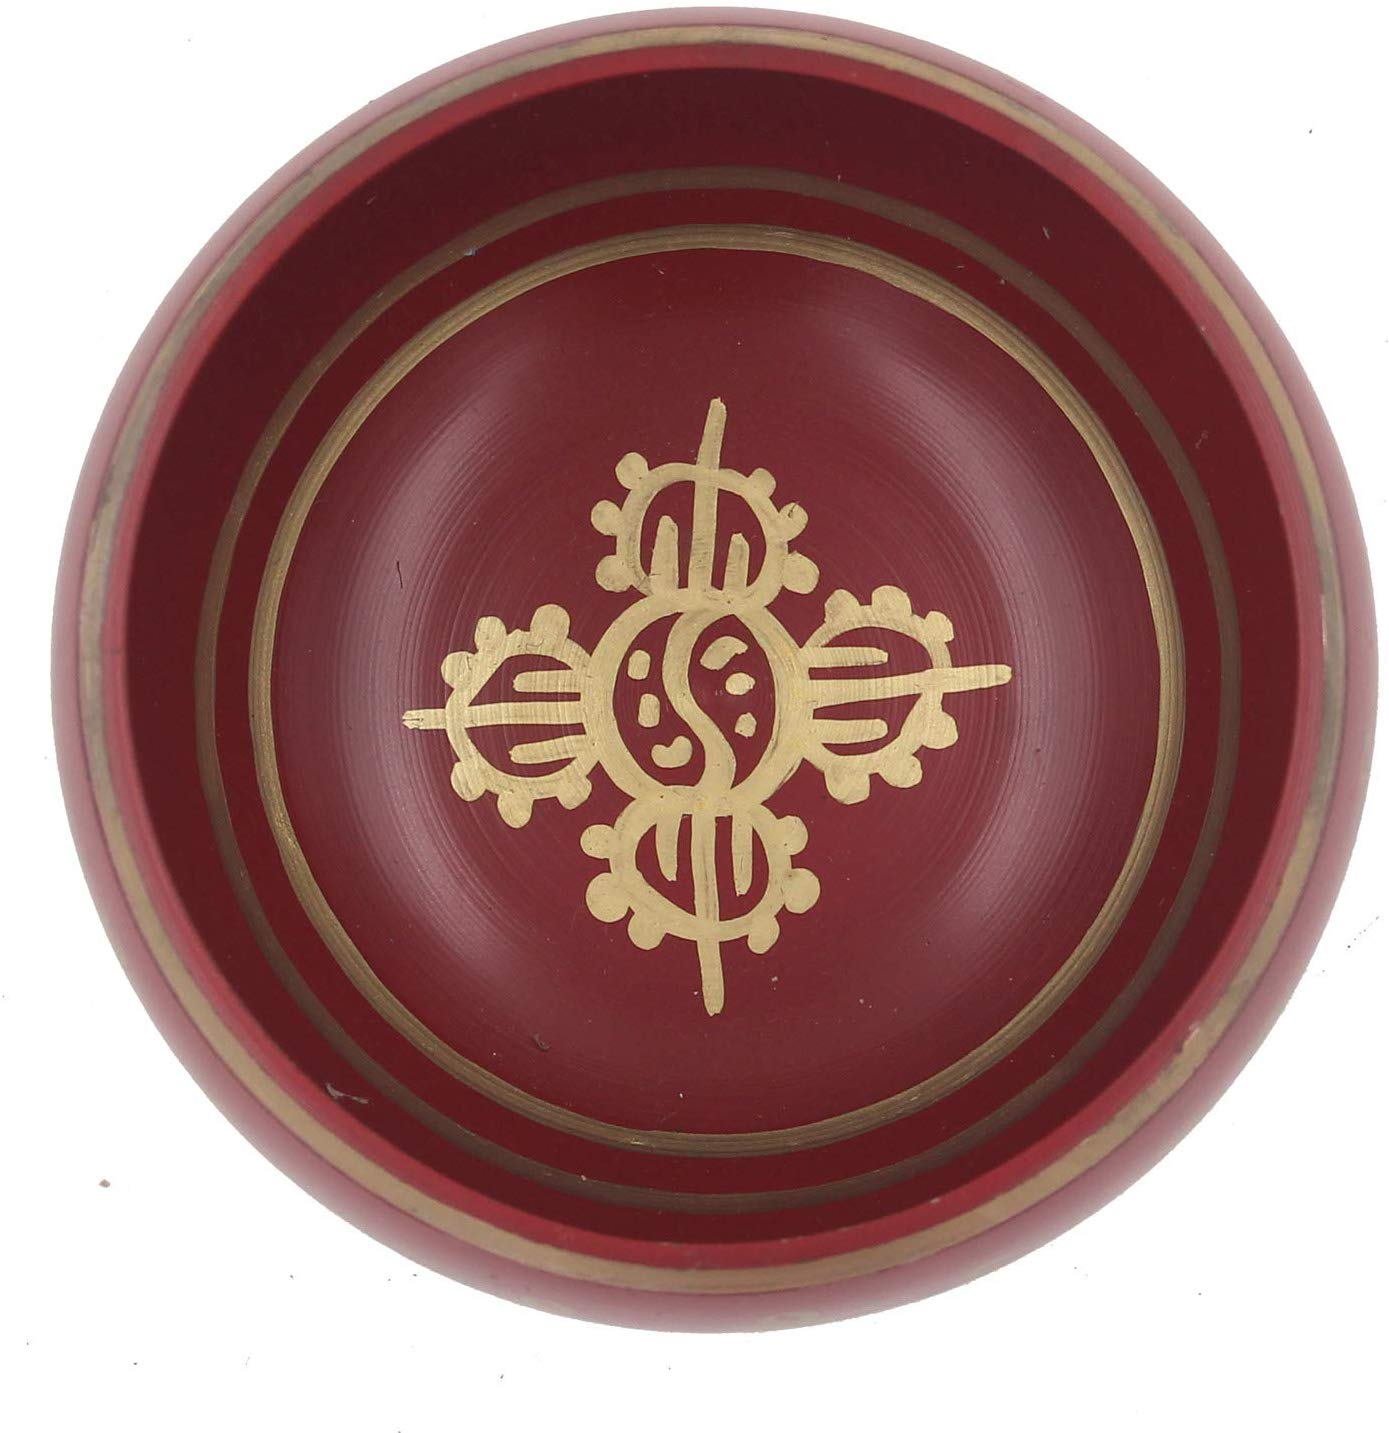 Tibetan Meditation Om Mani Padme Hum Peace Singing Bowl Complete Set (X-Large, Red) - DharmaObjects